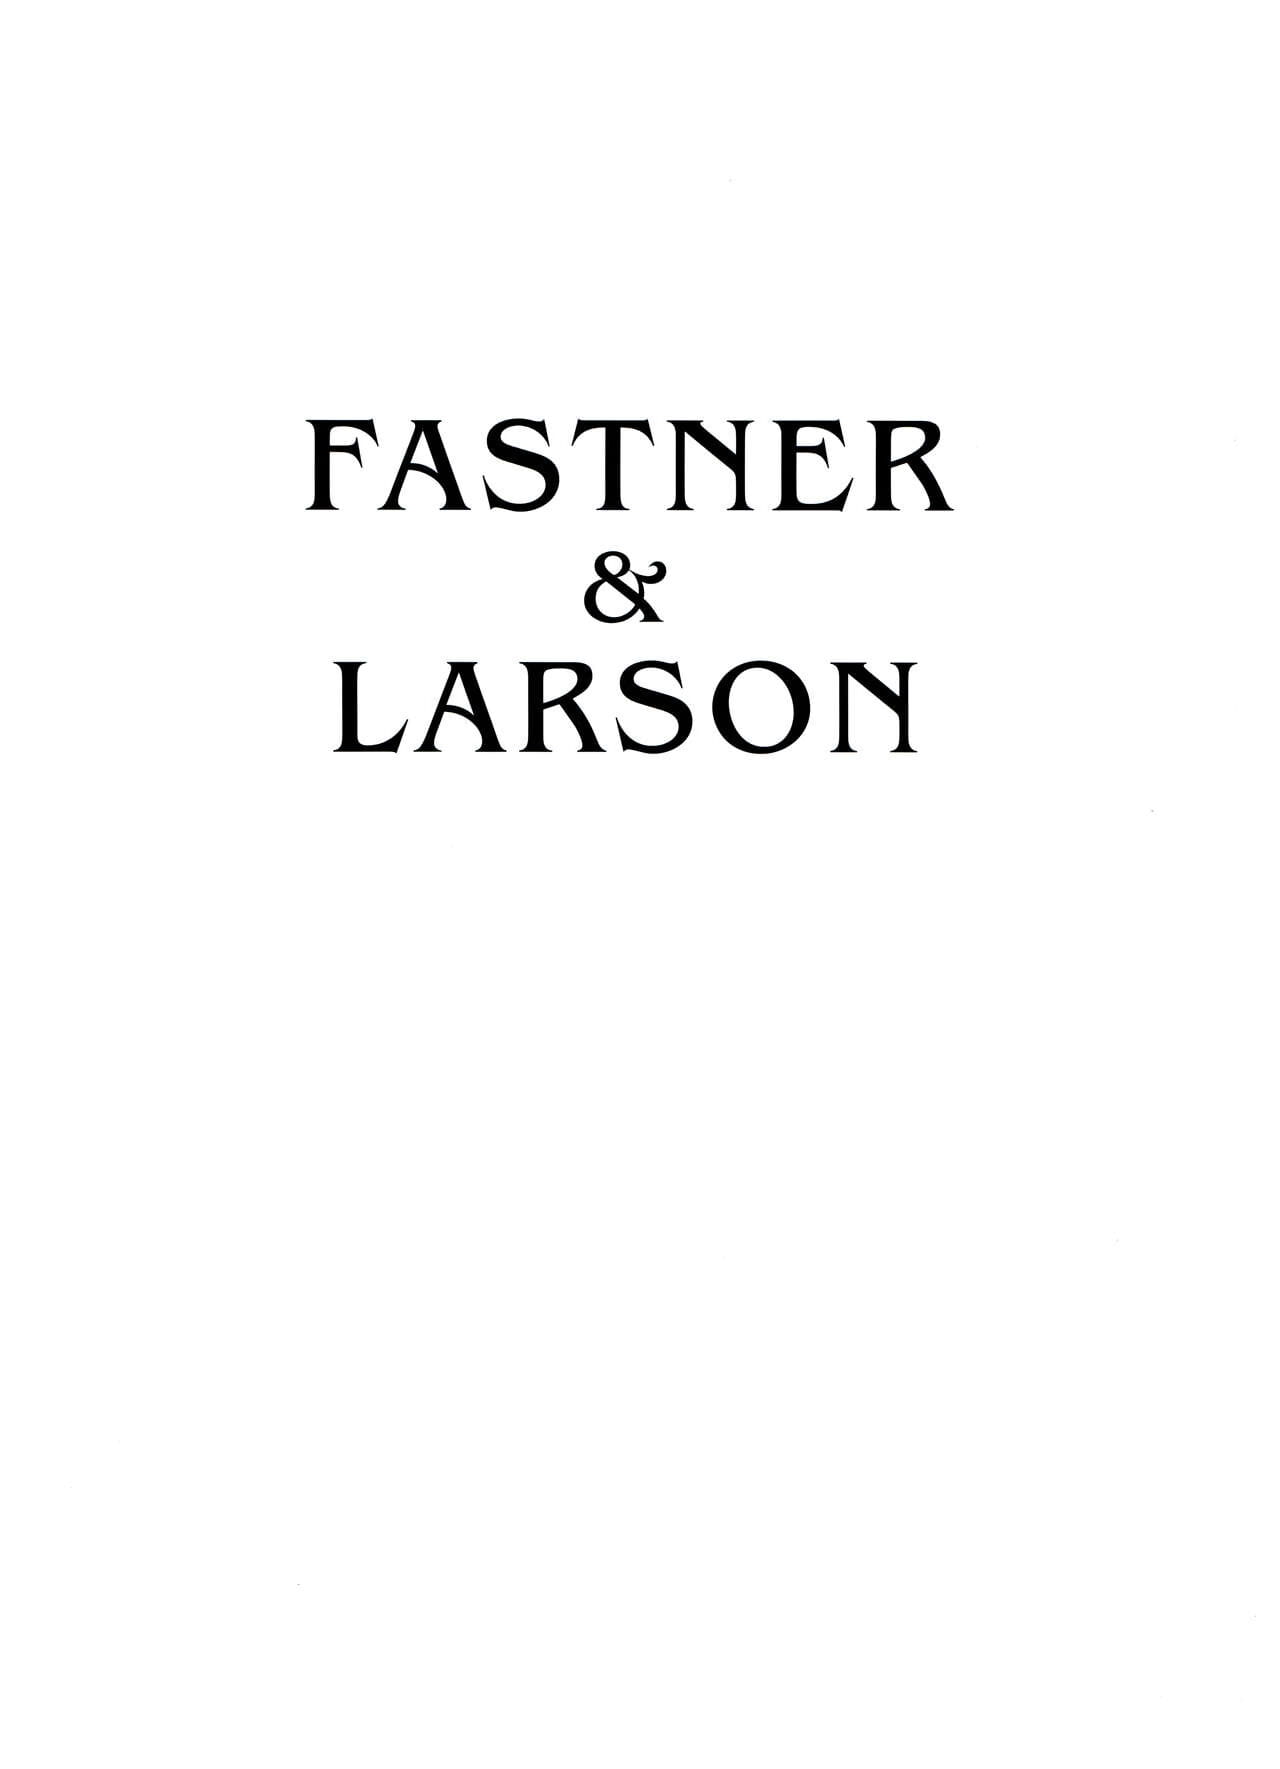 Art Fantastix #08 - The Art of Fastner & Larson page 1